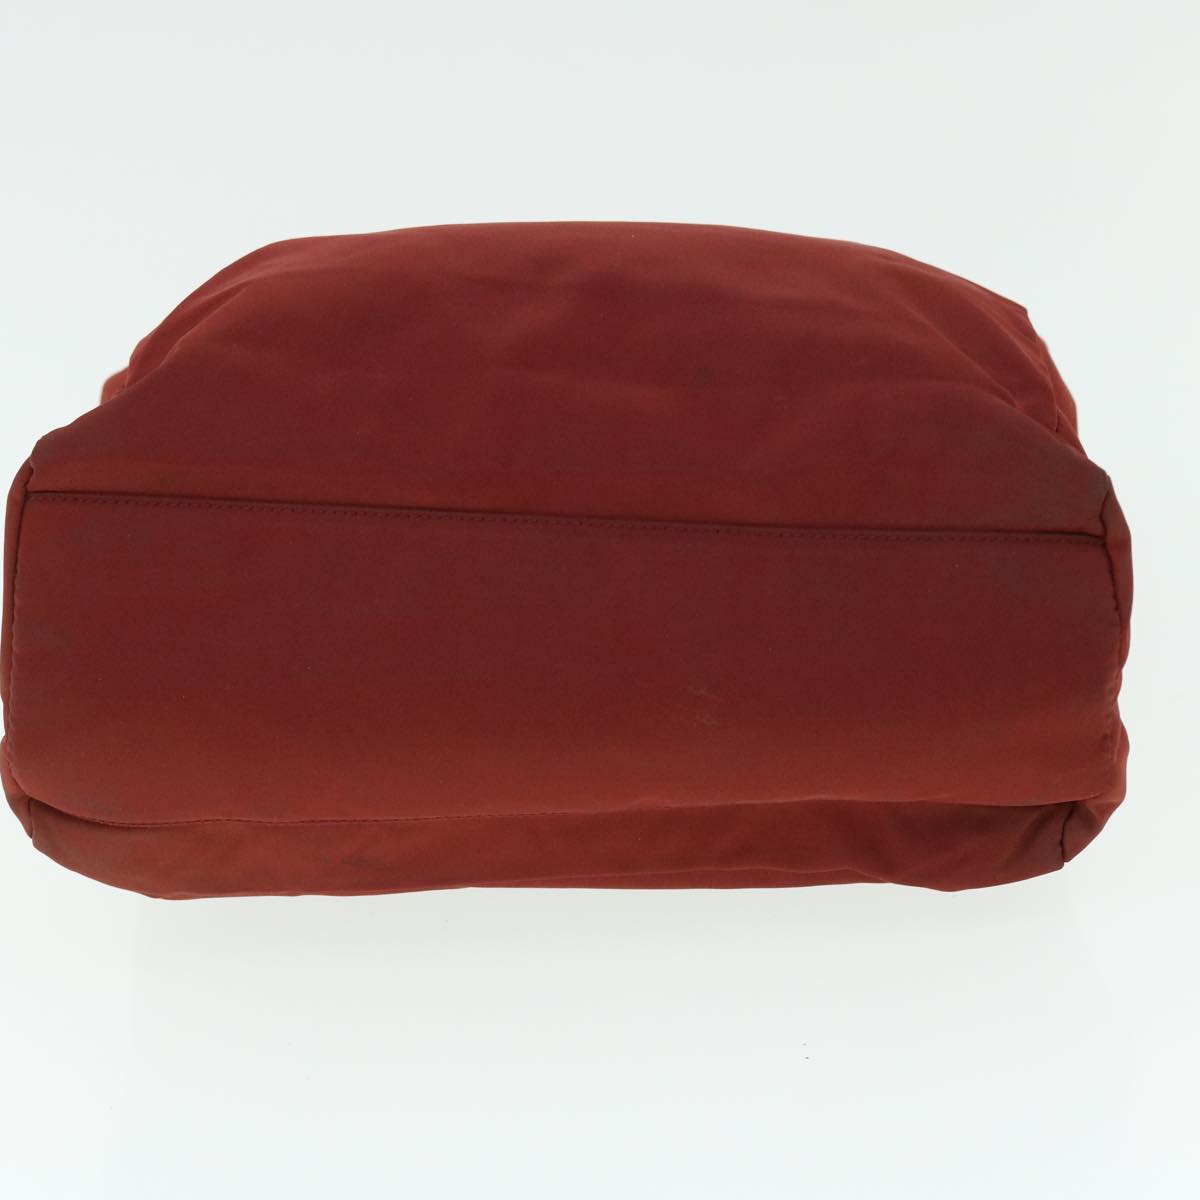 PRADA Tote Bag Nylon Red Auth 51838